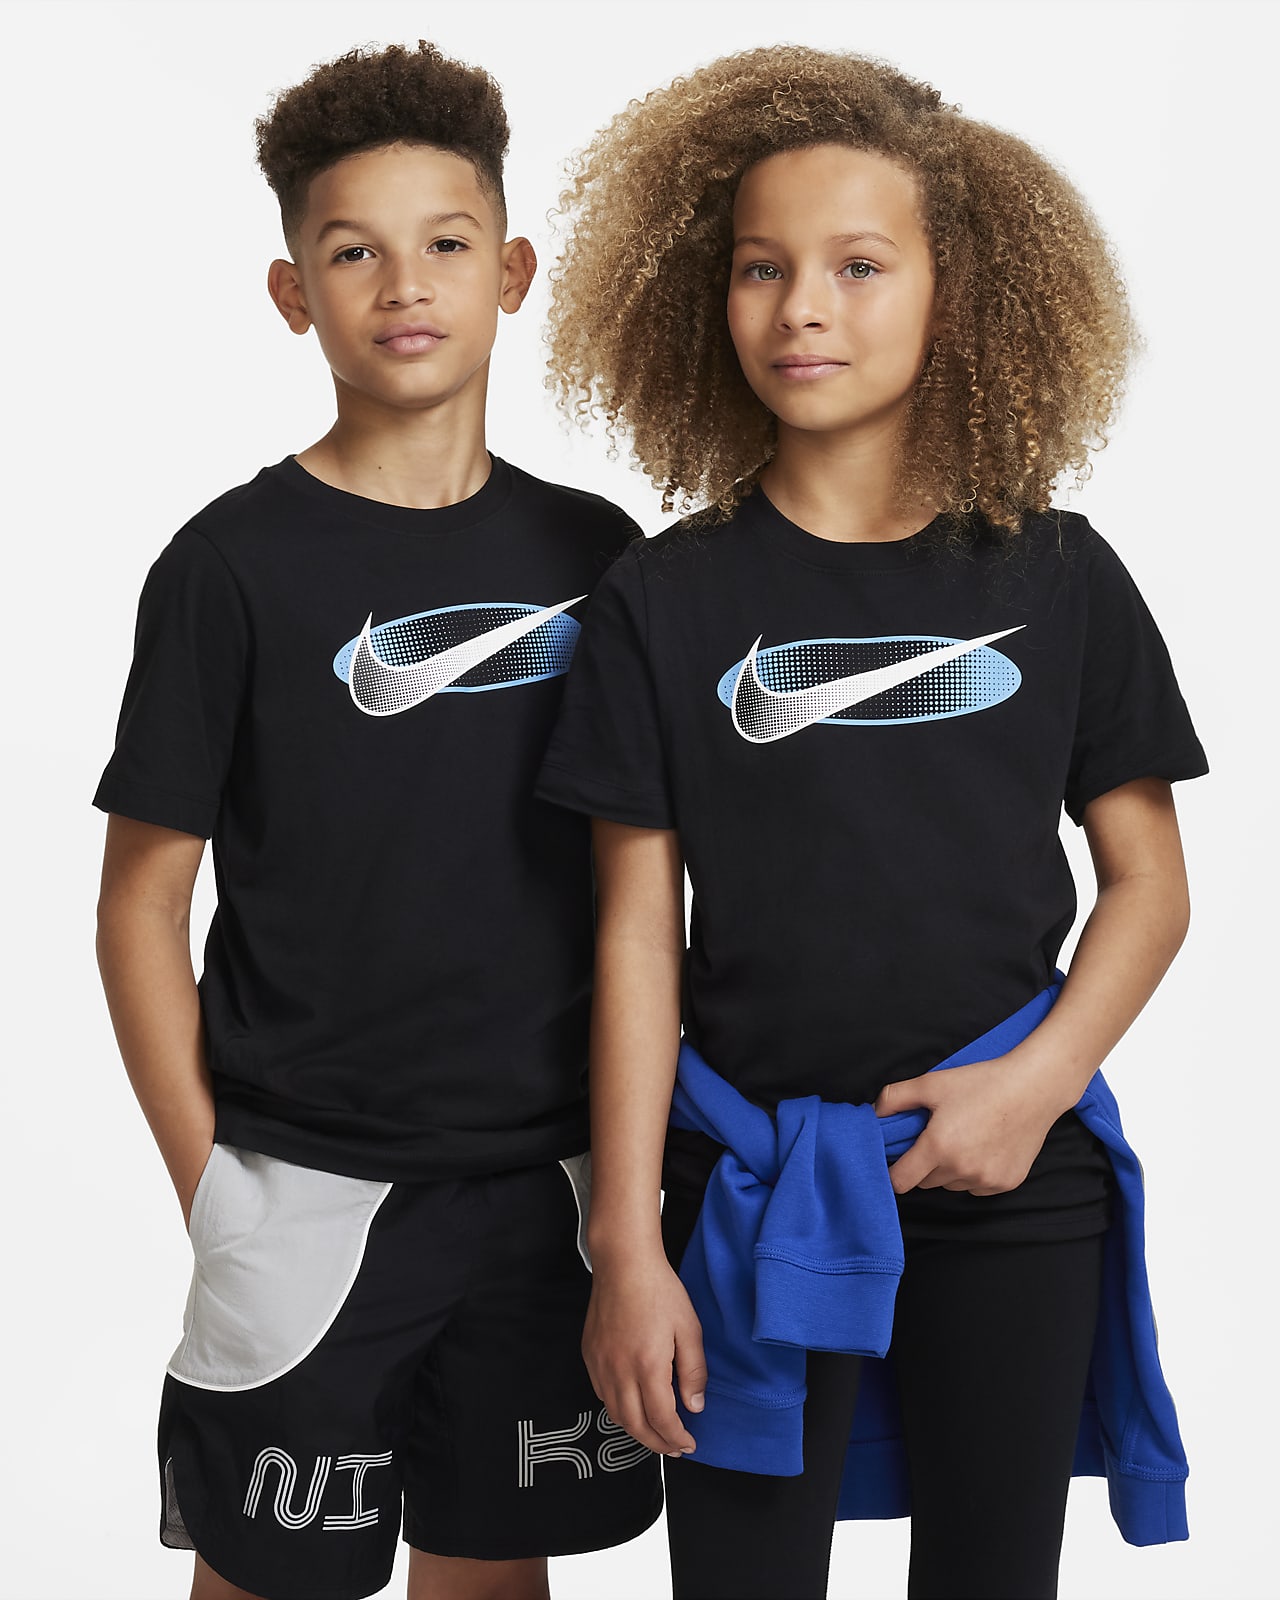 Nike Sportswear Chándal - Niño/a